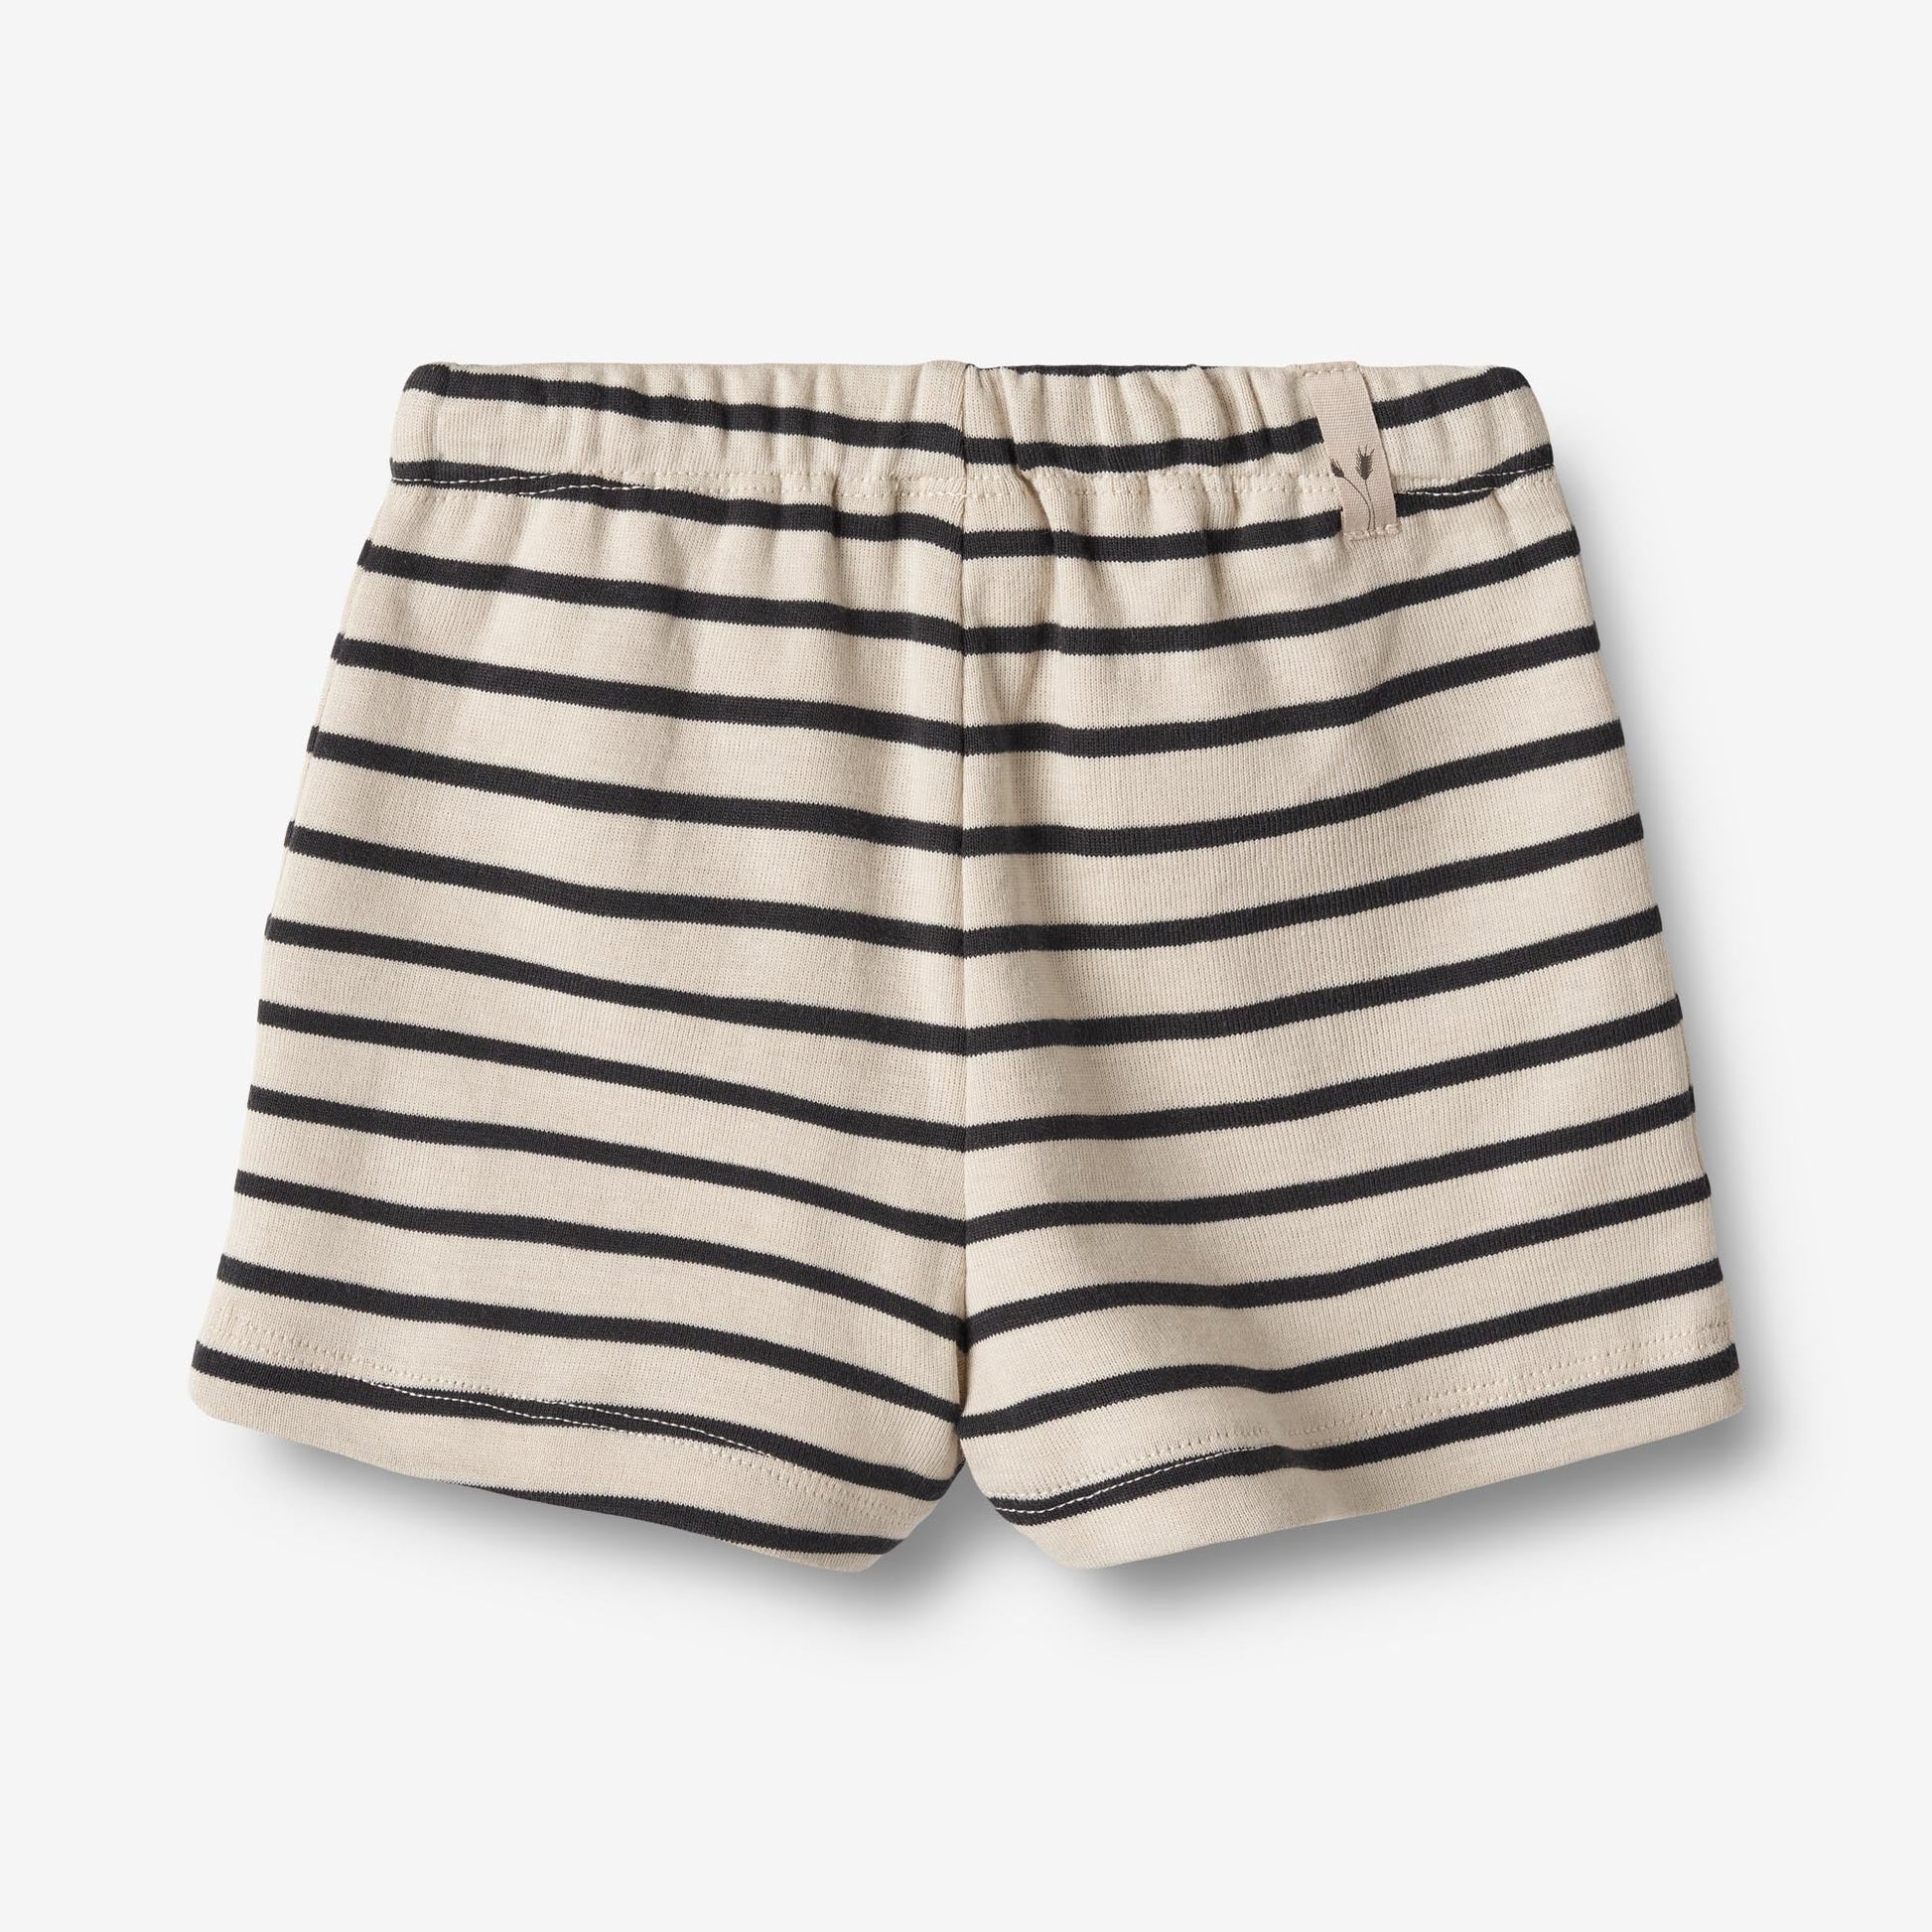 Wheat 'Vic' Jersey Baby Shorts - Navy Stripe